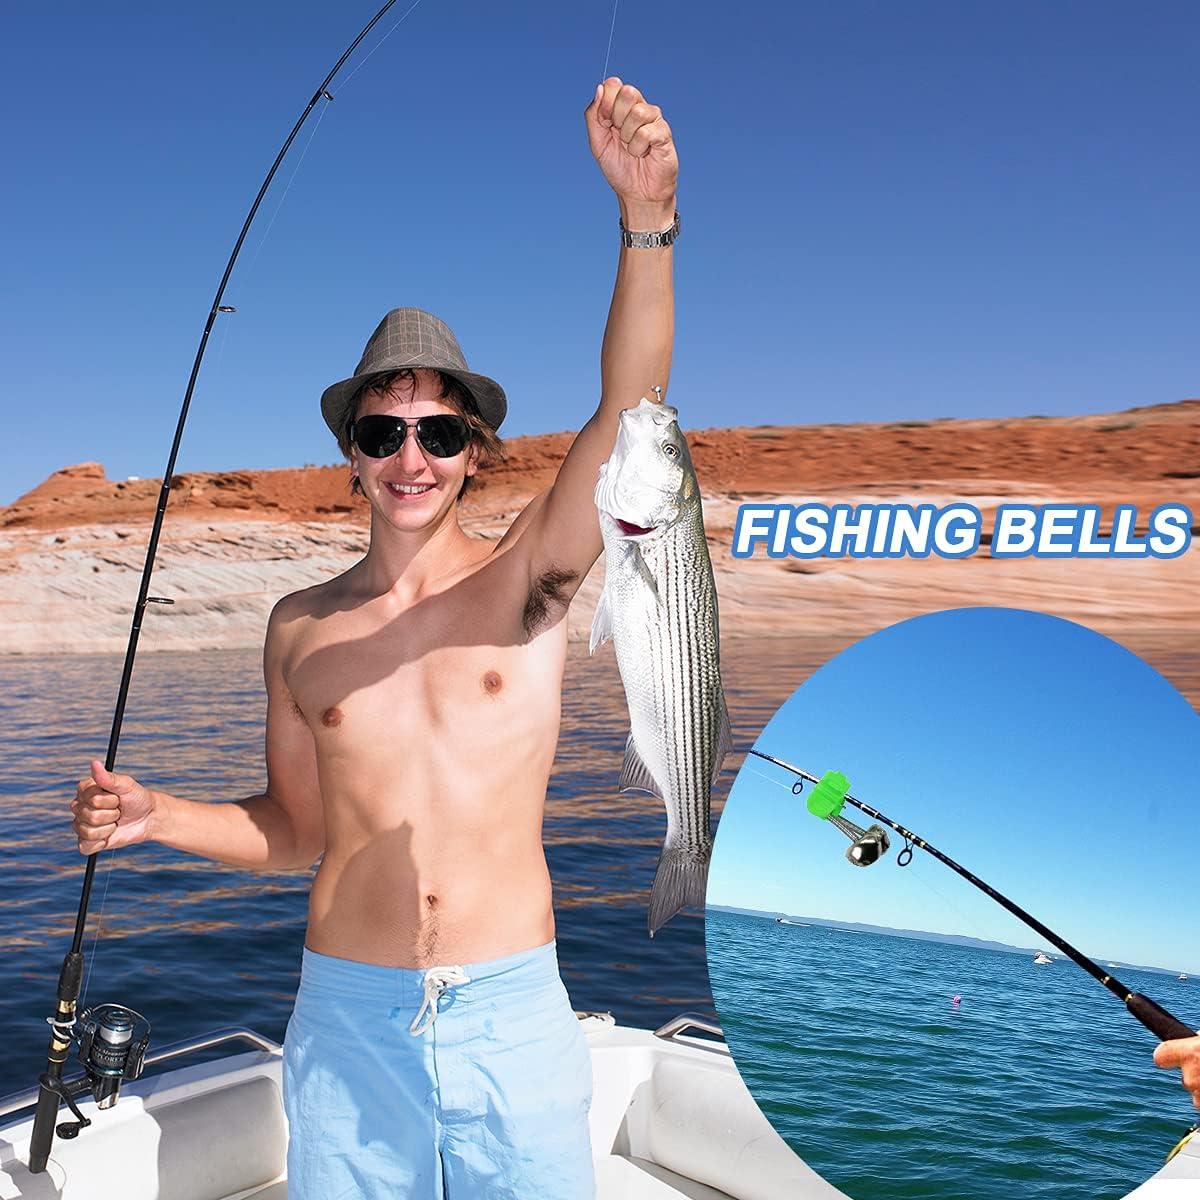 DAFURIET 50 Pieces Fishing Alarm Bells, Plastic Fishing Rod Clips with Dual  Alert Bells